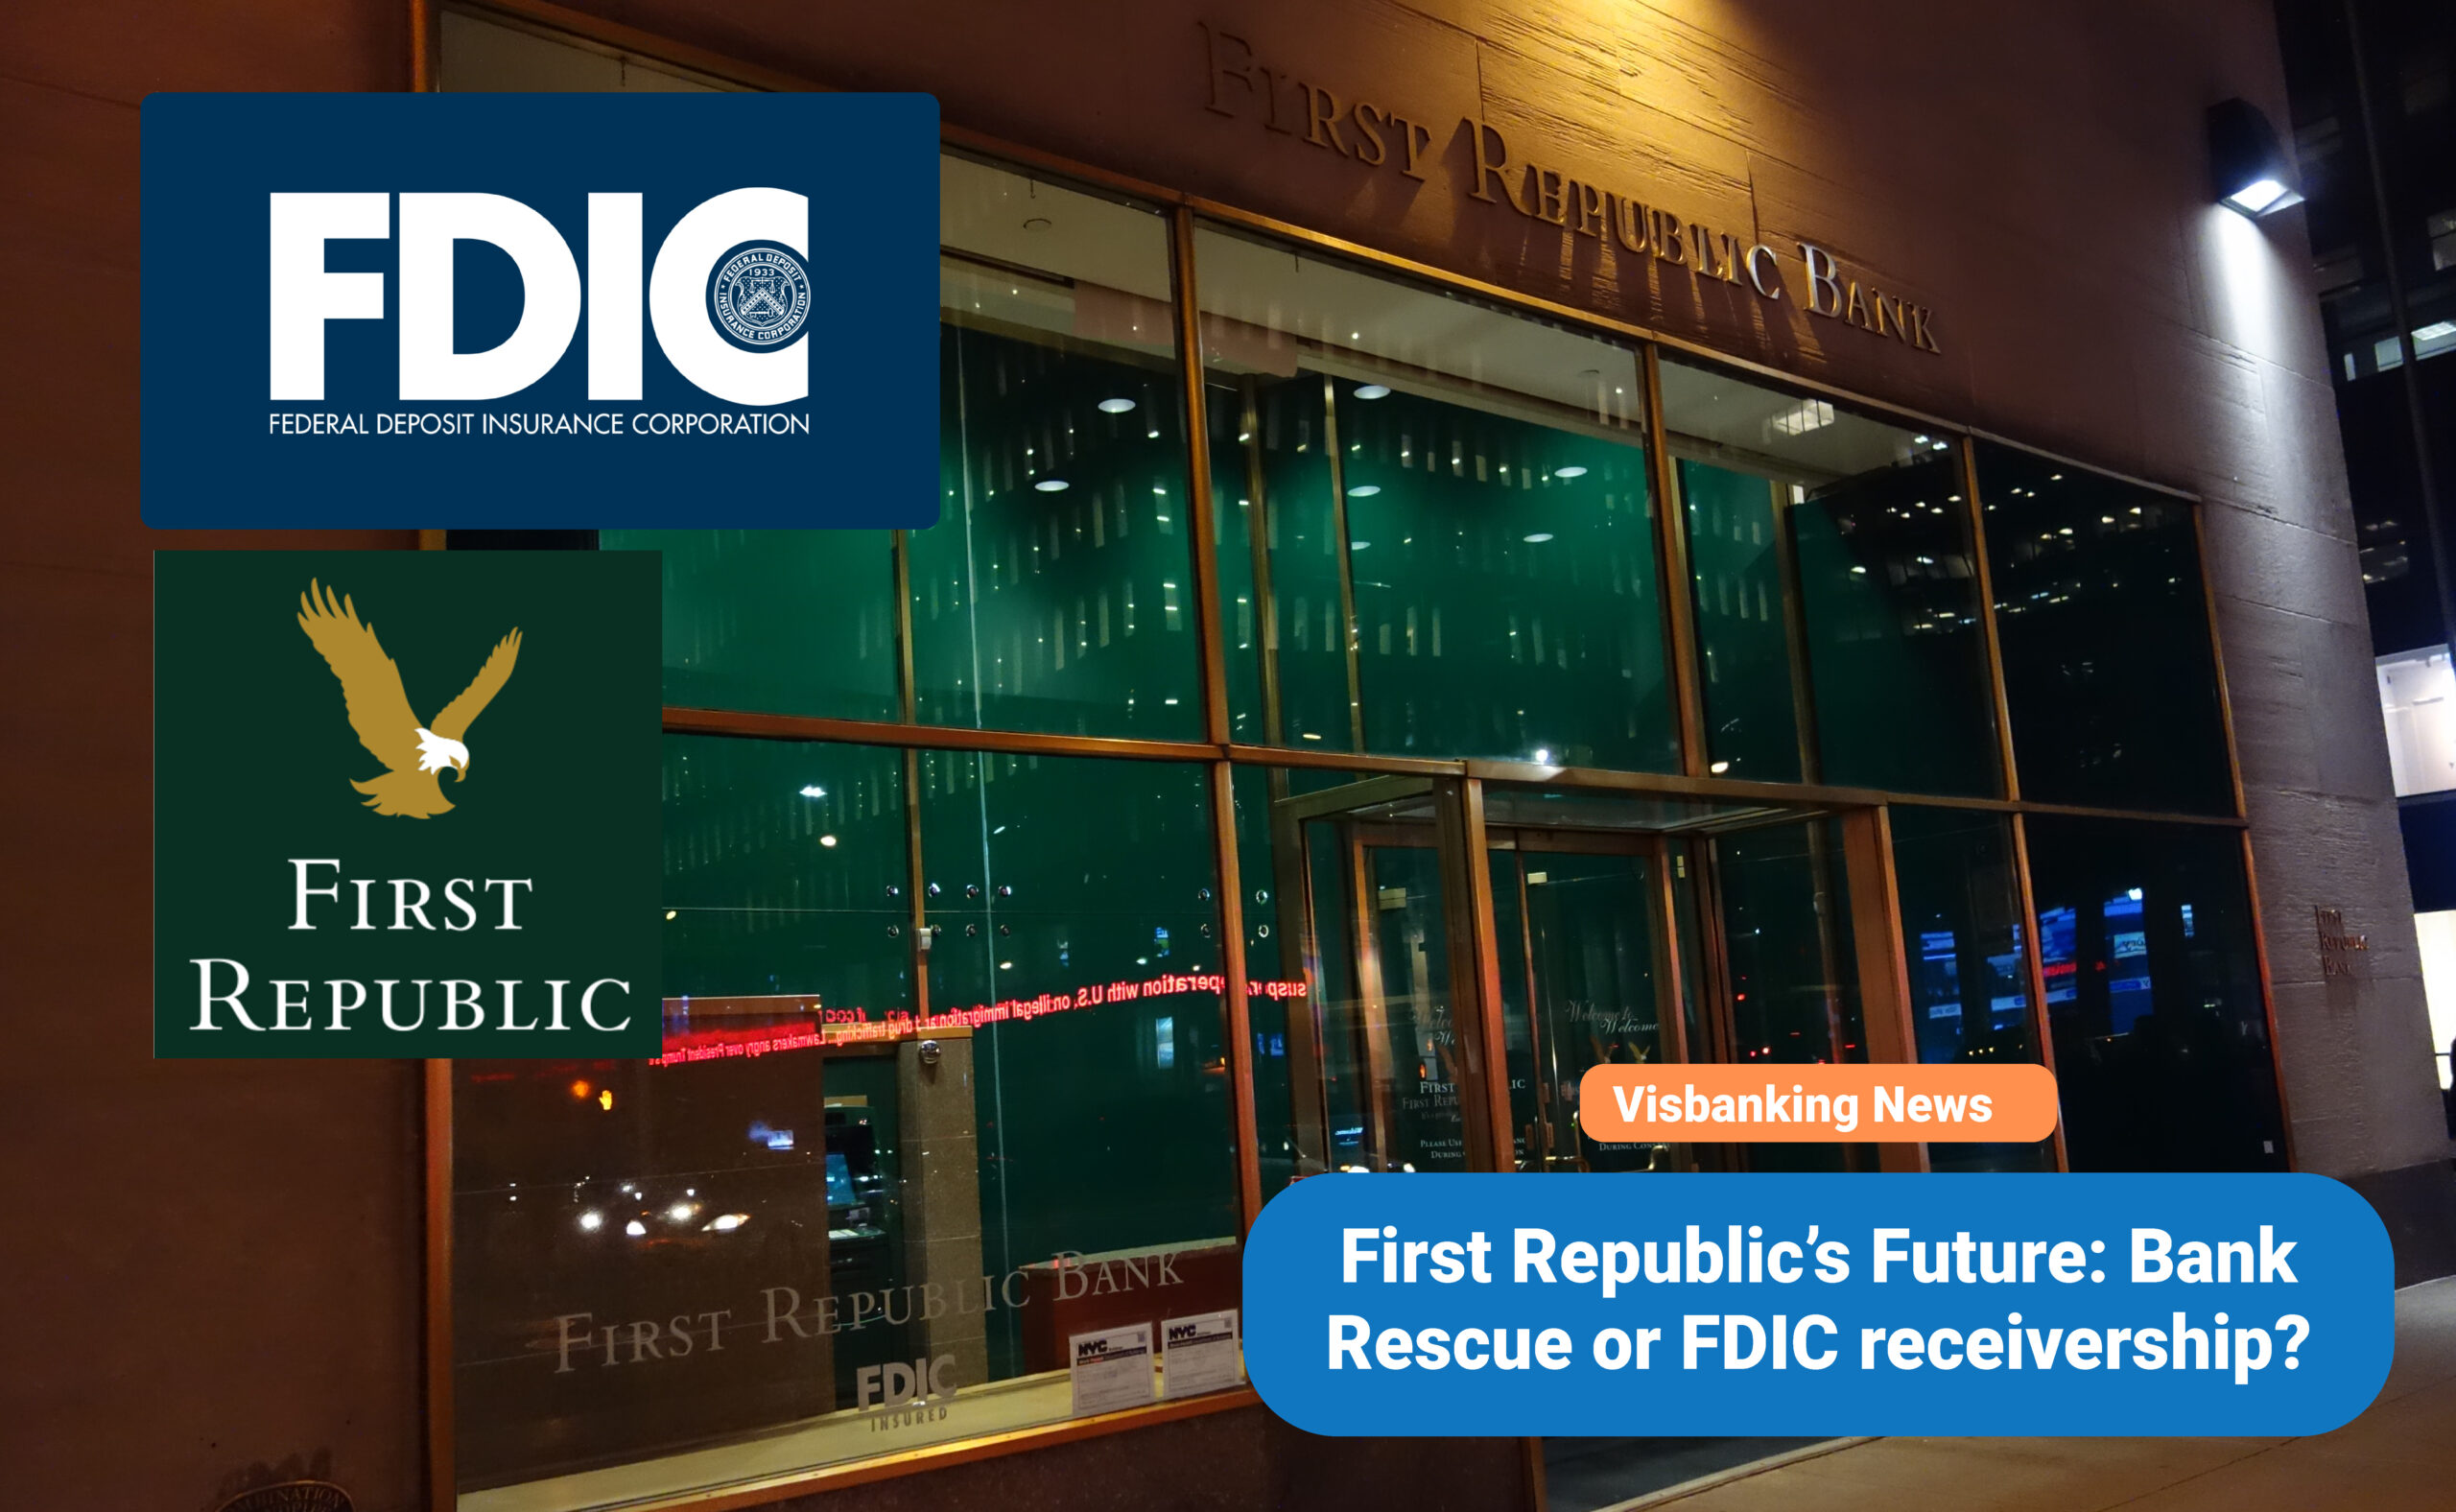 First Republic’s Future: Bank Rescue or FDIC receivership?